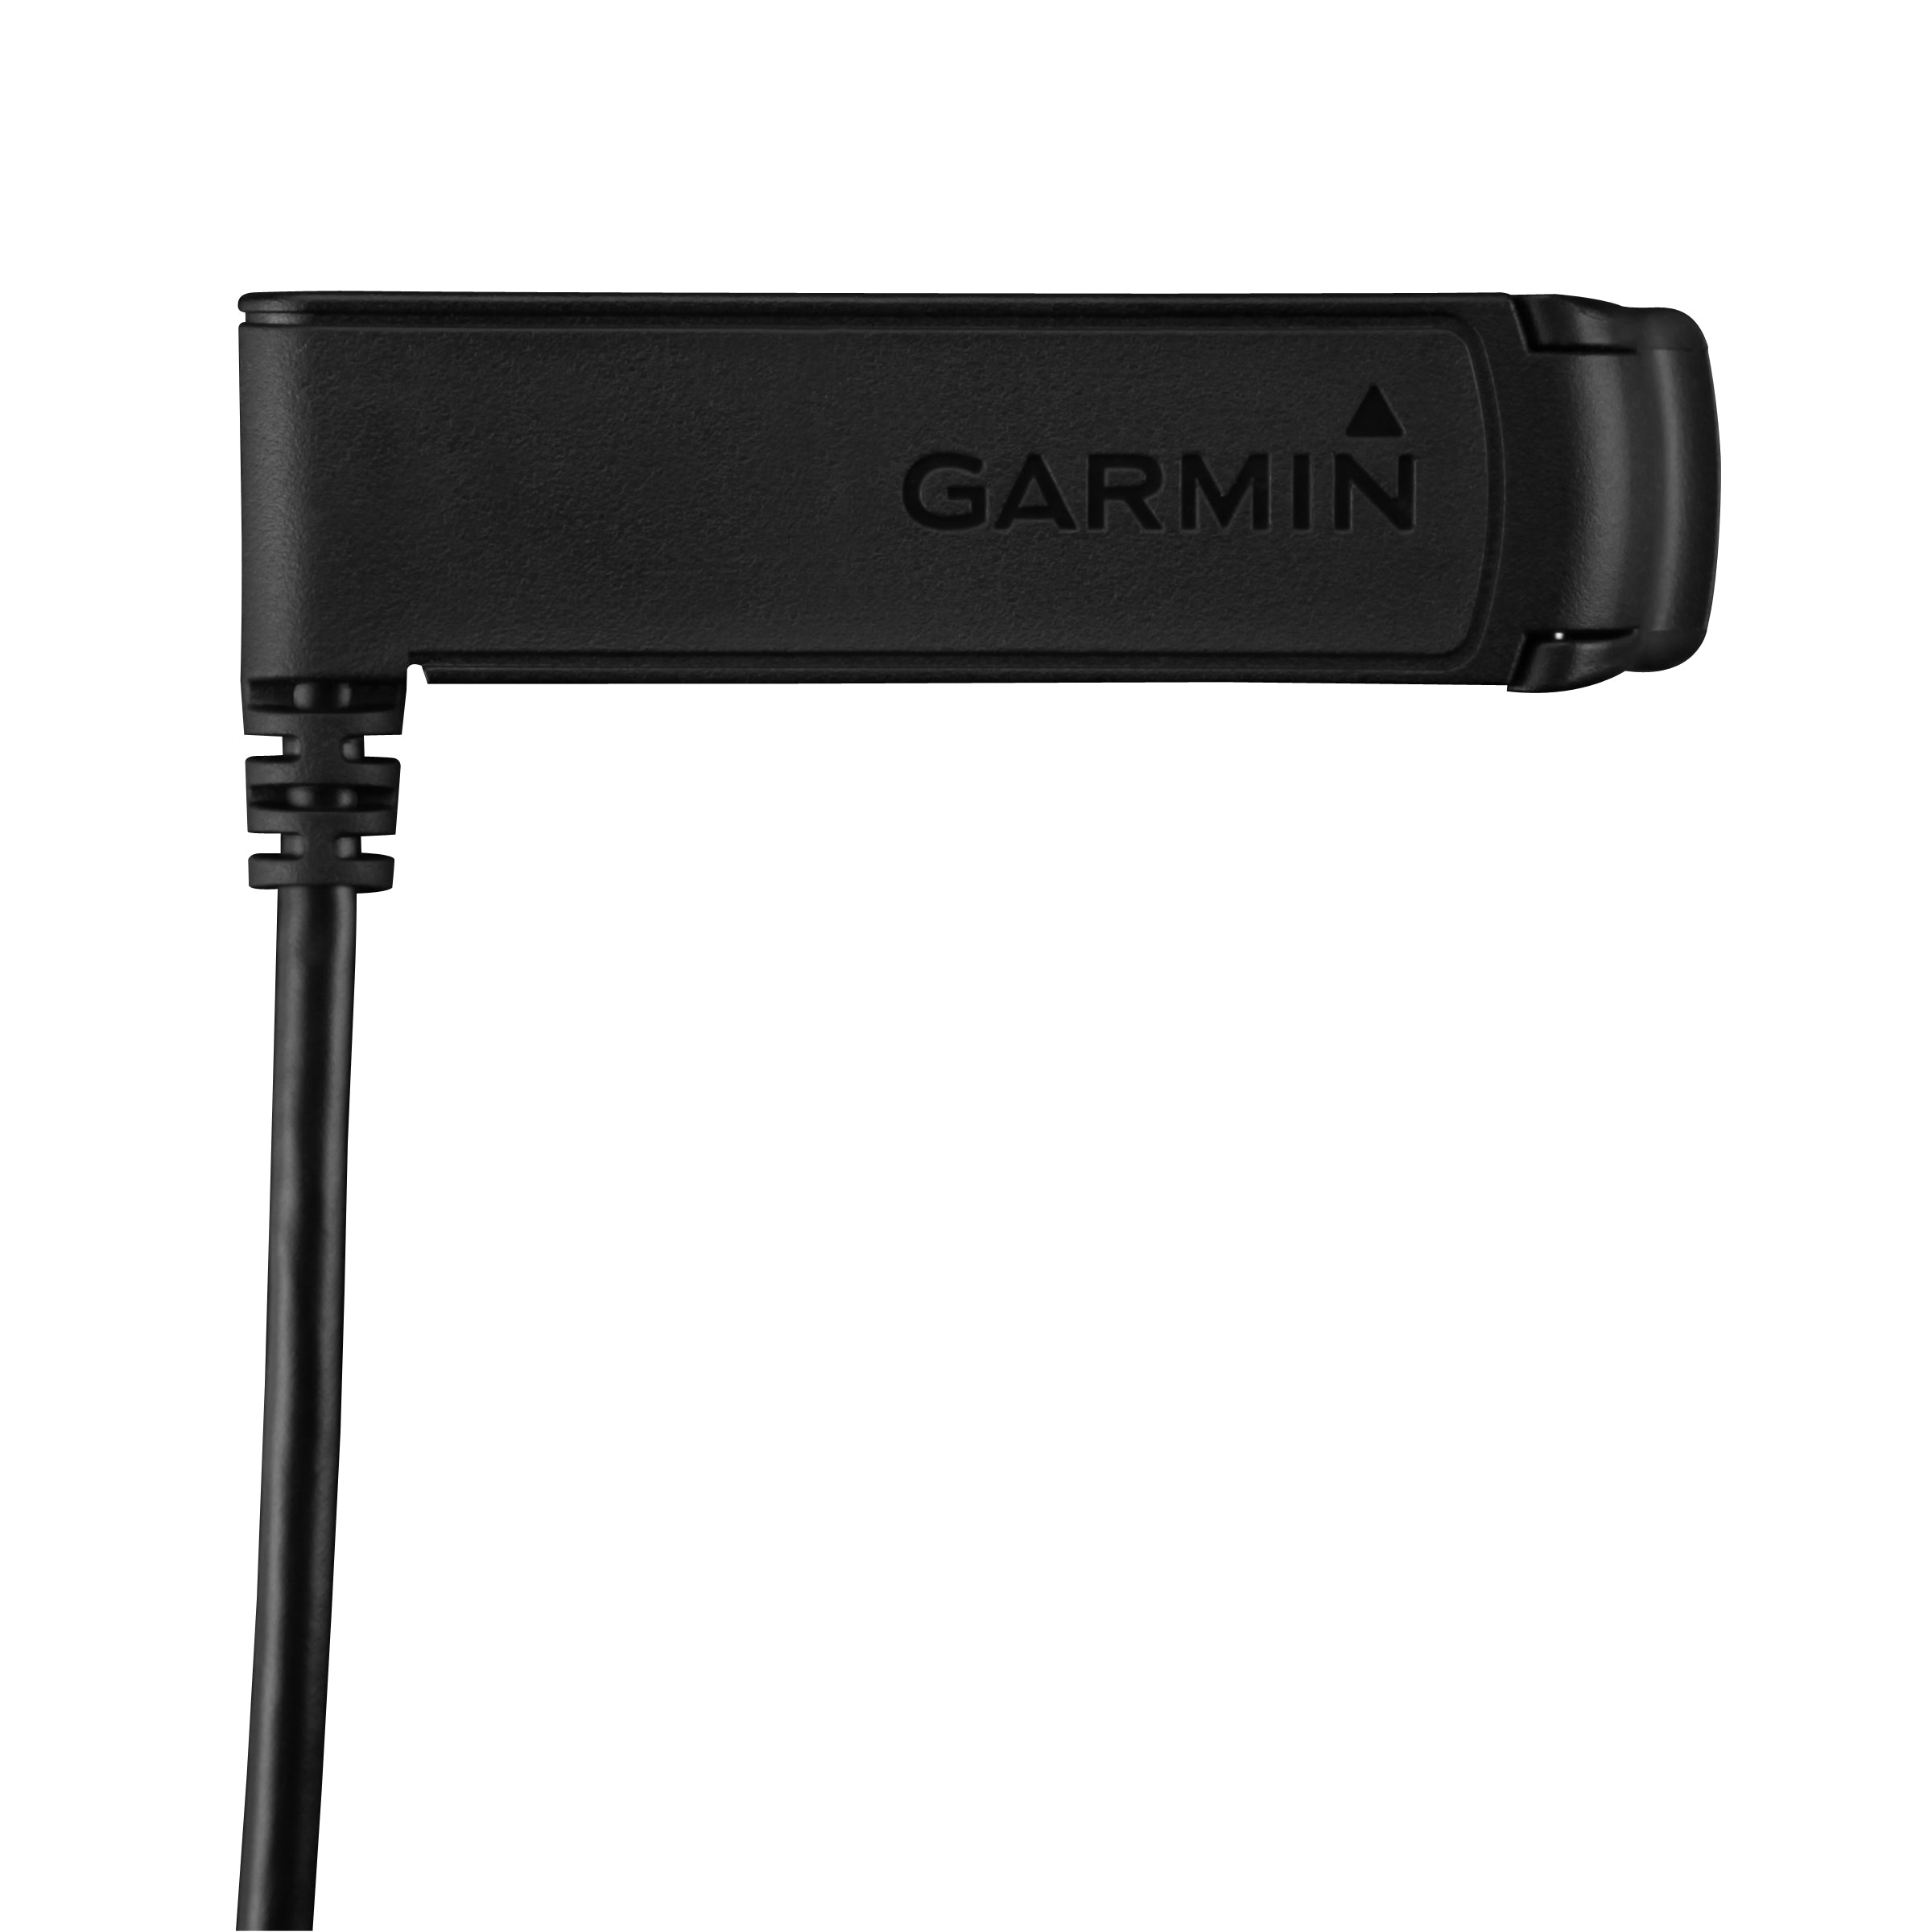 Garmin fēnix USB-/opladerkabel